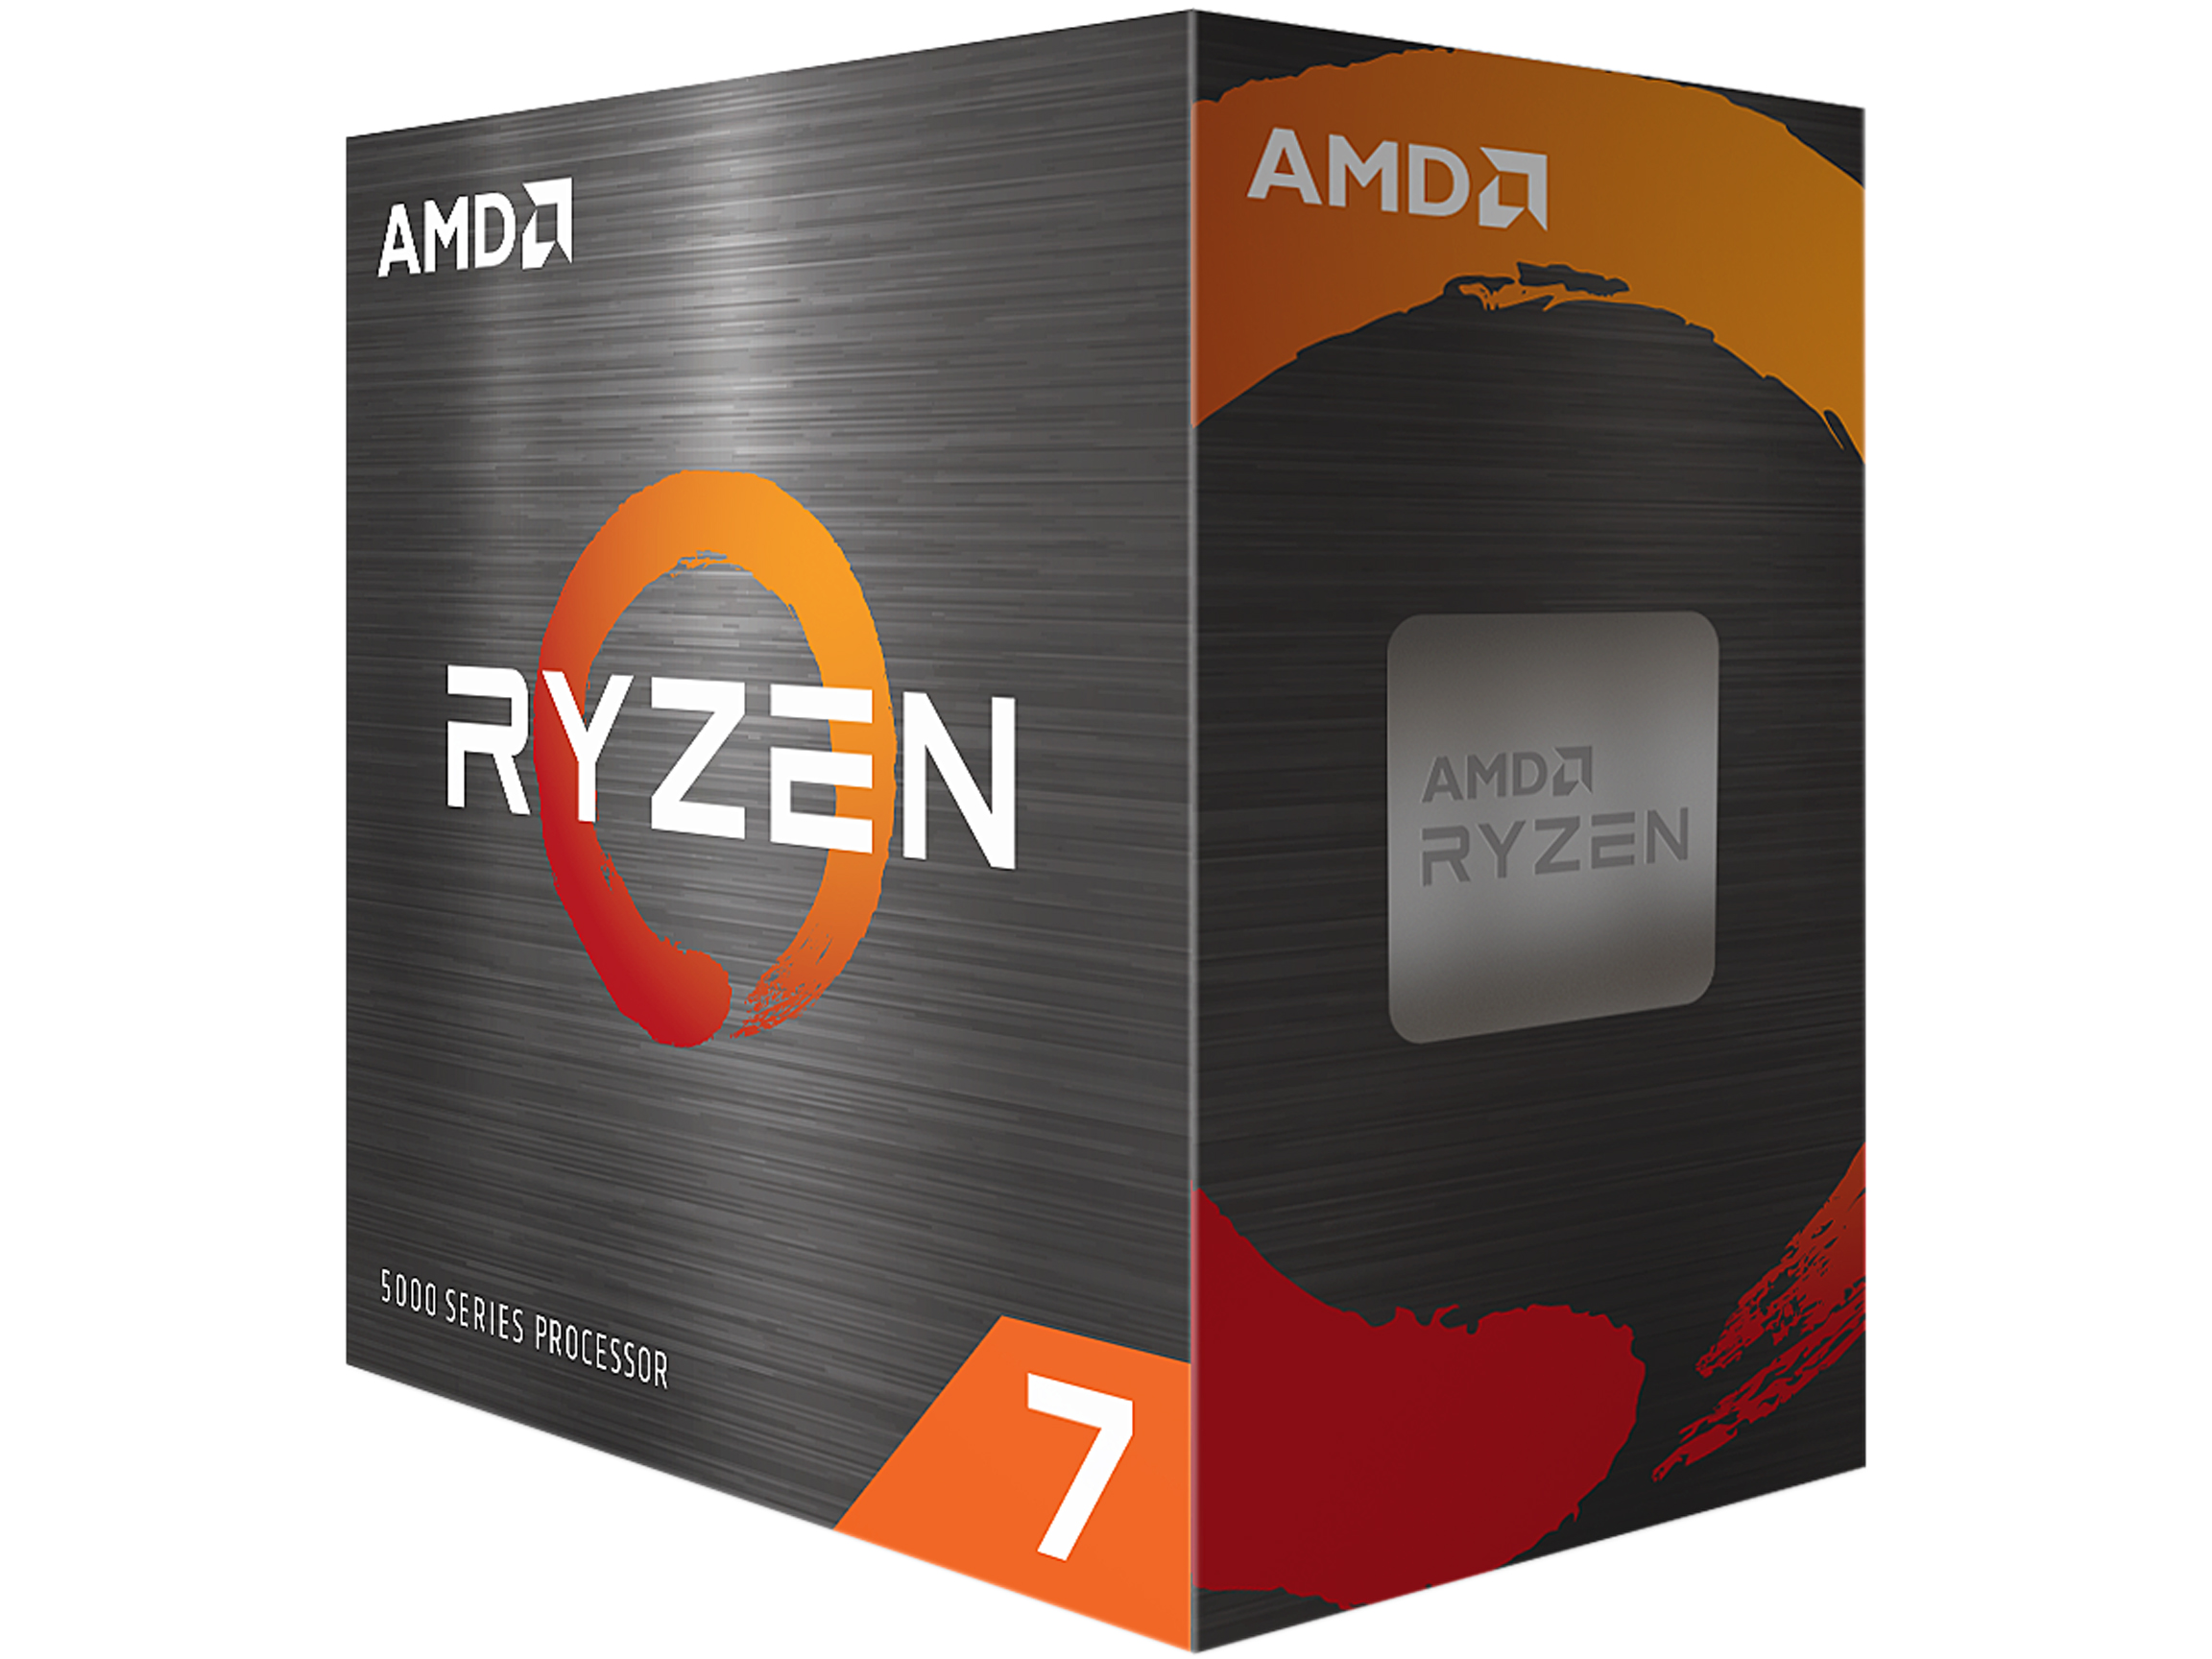 AMD Ryzen 7 5800X 3.8 GHz Eight-Core AM4 Desktop Processor $199 + Free Shipping